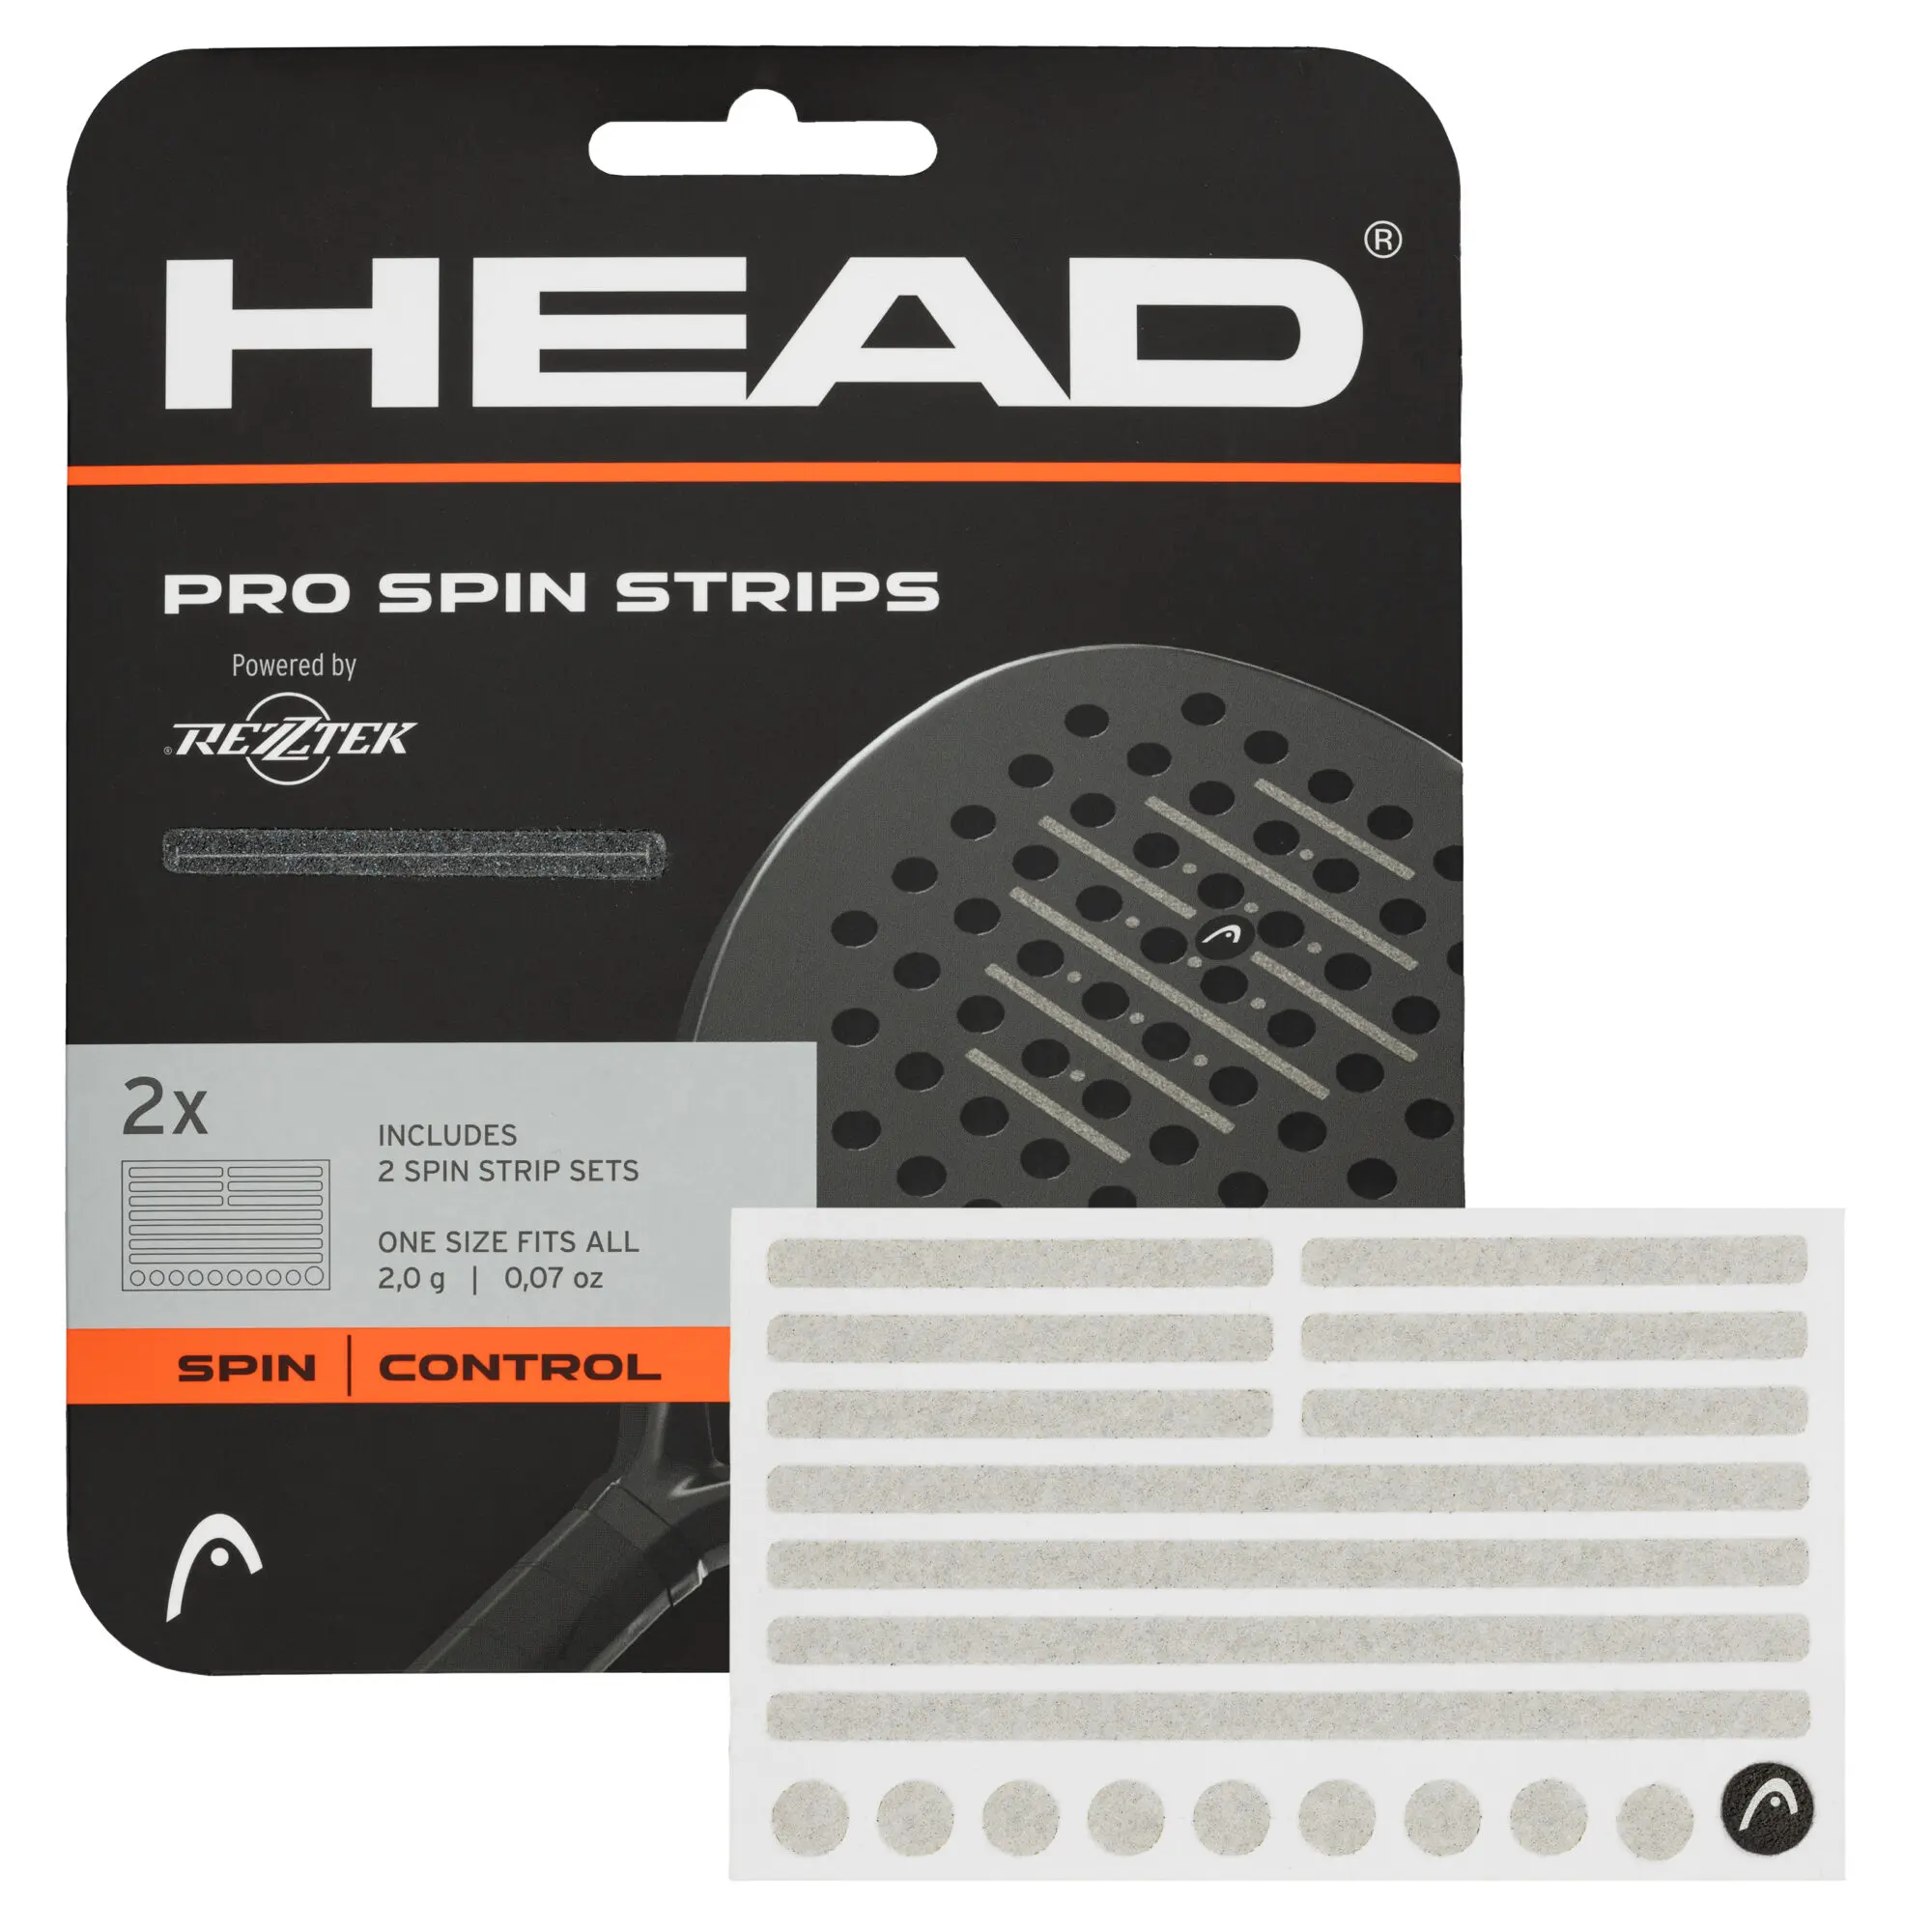 Head Pro Spin Strips